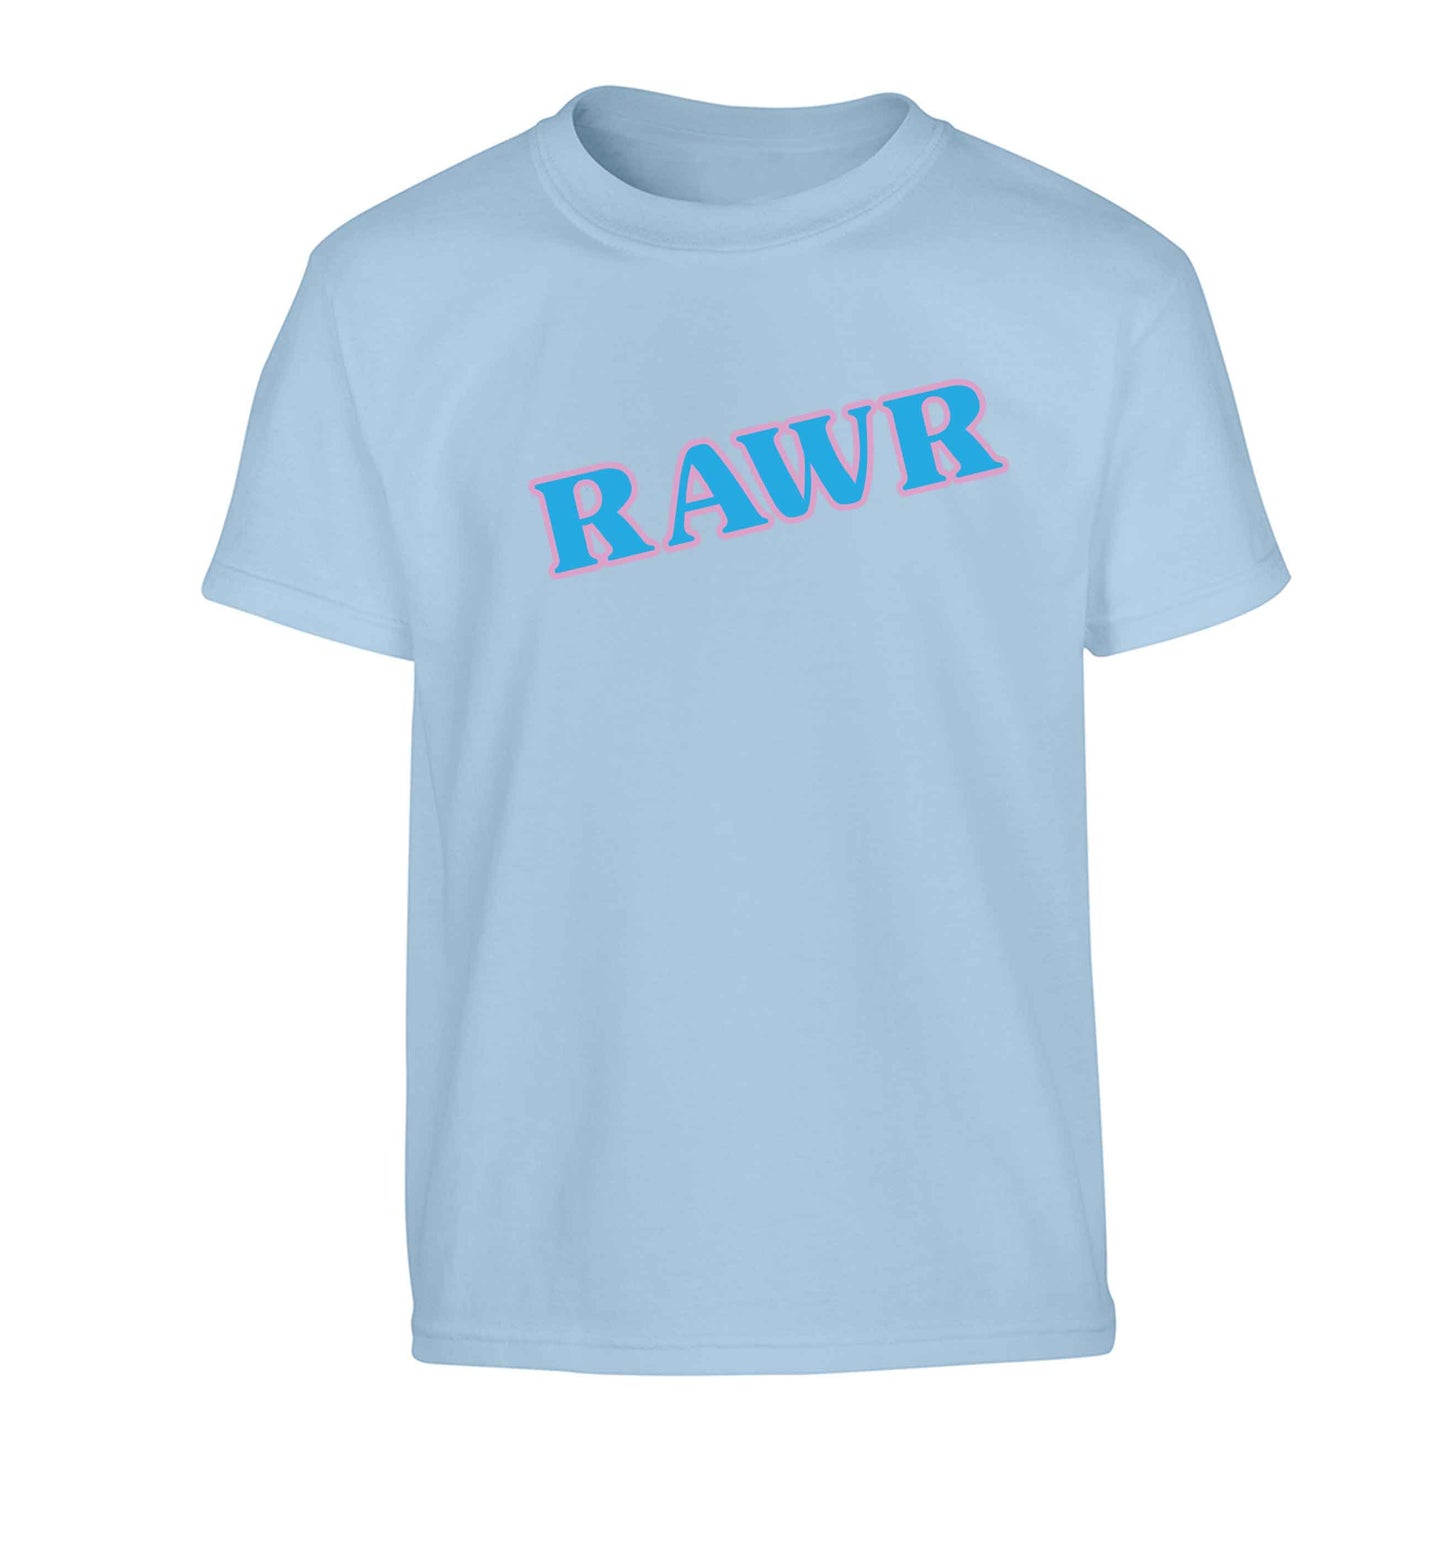 Rawr Children's light blue Tshirt 12-13 Years